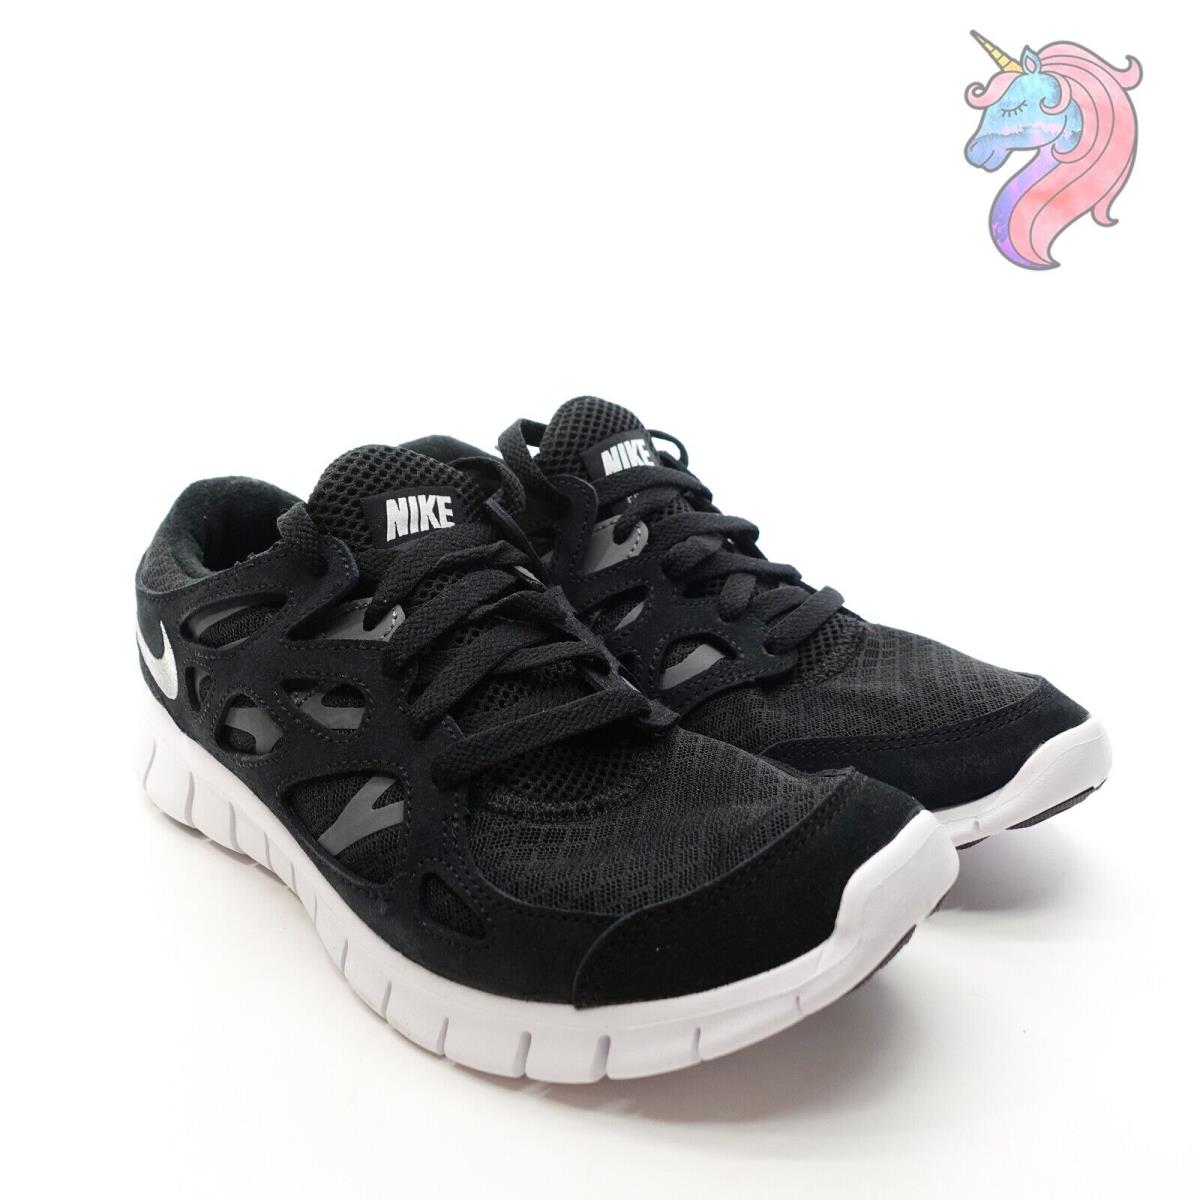 Nike shoes Free Run - Black, White 5